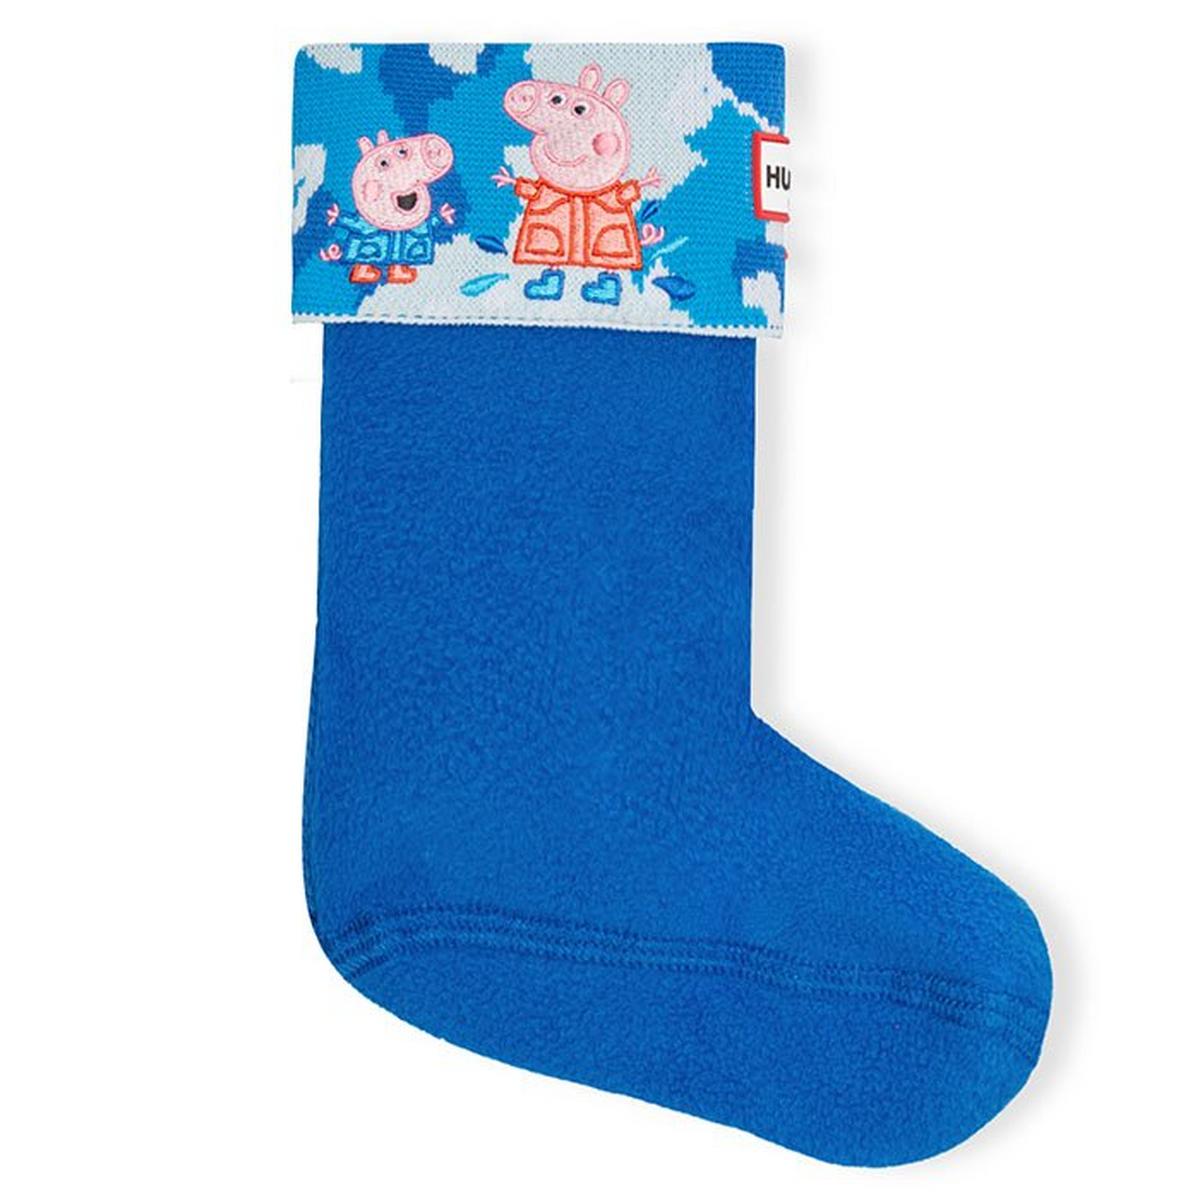 Chaussettes Peppa Pig Muddy Puddles Boot pour enfants